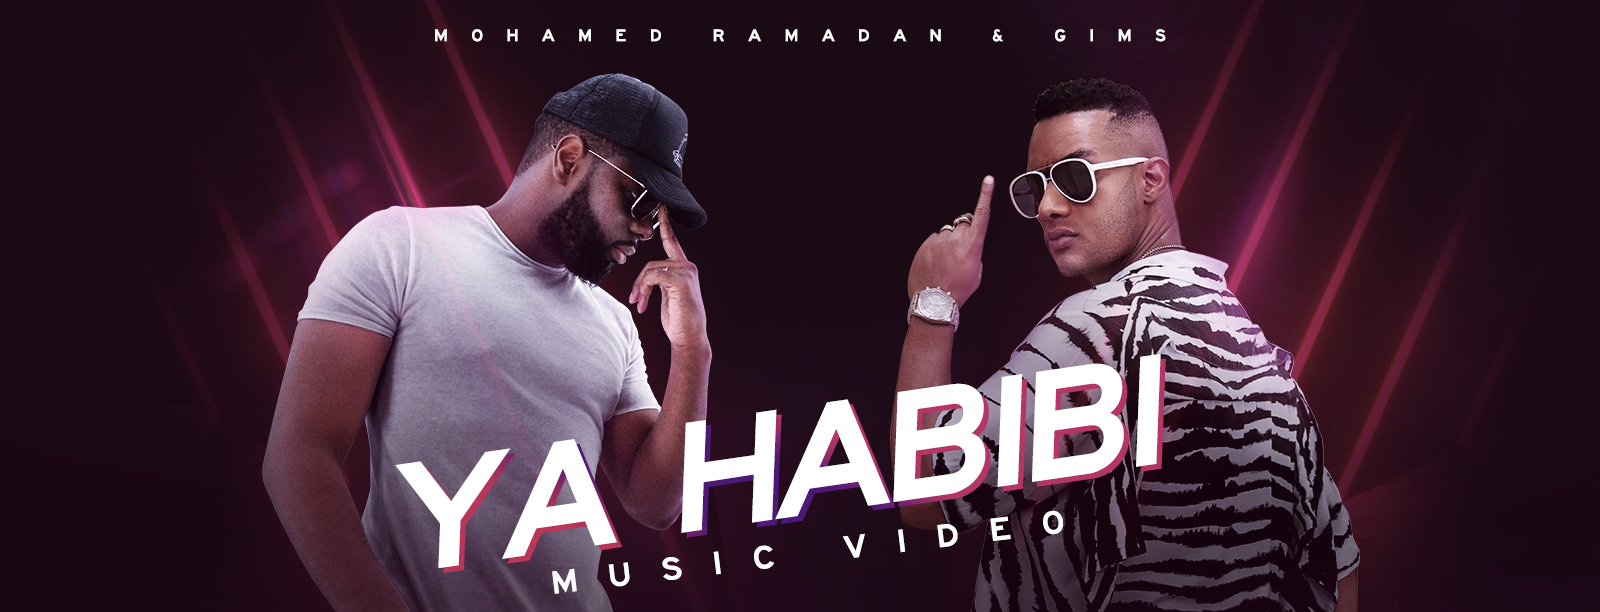 Ya Habibi - Mohamed Ramadan Ft Metri Gems